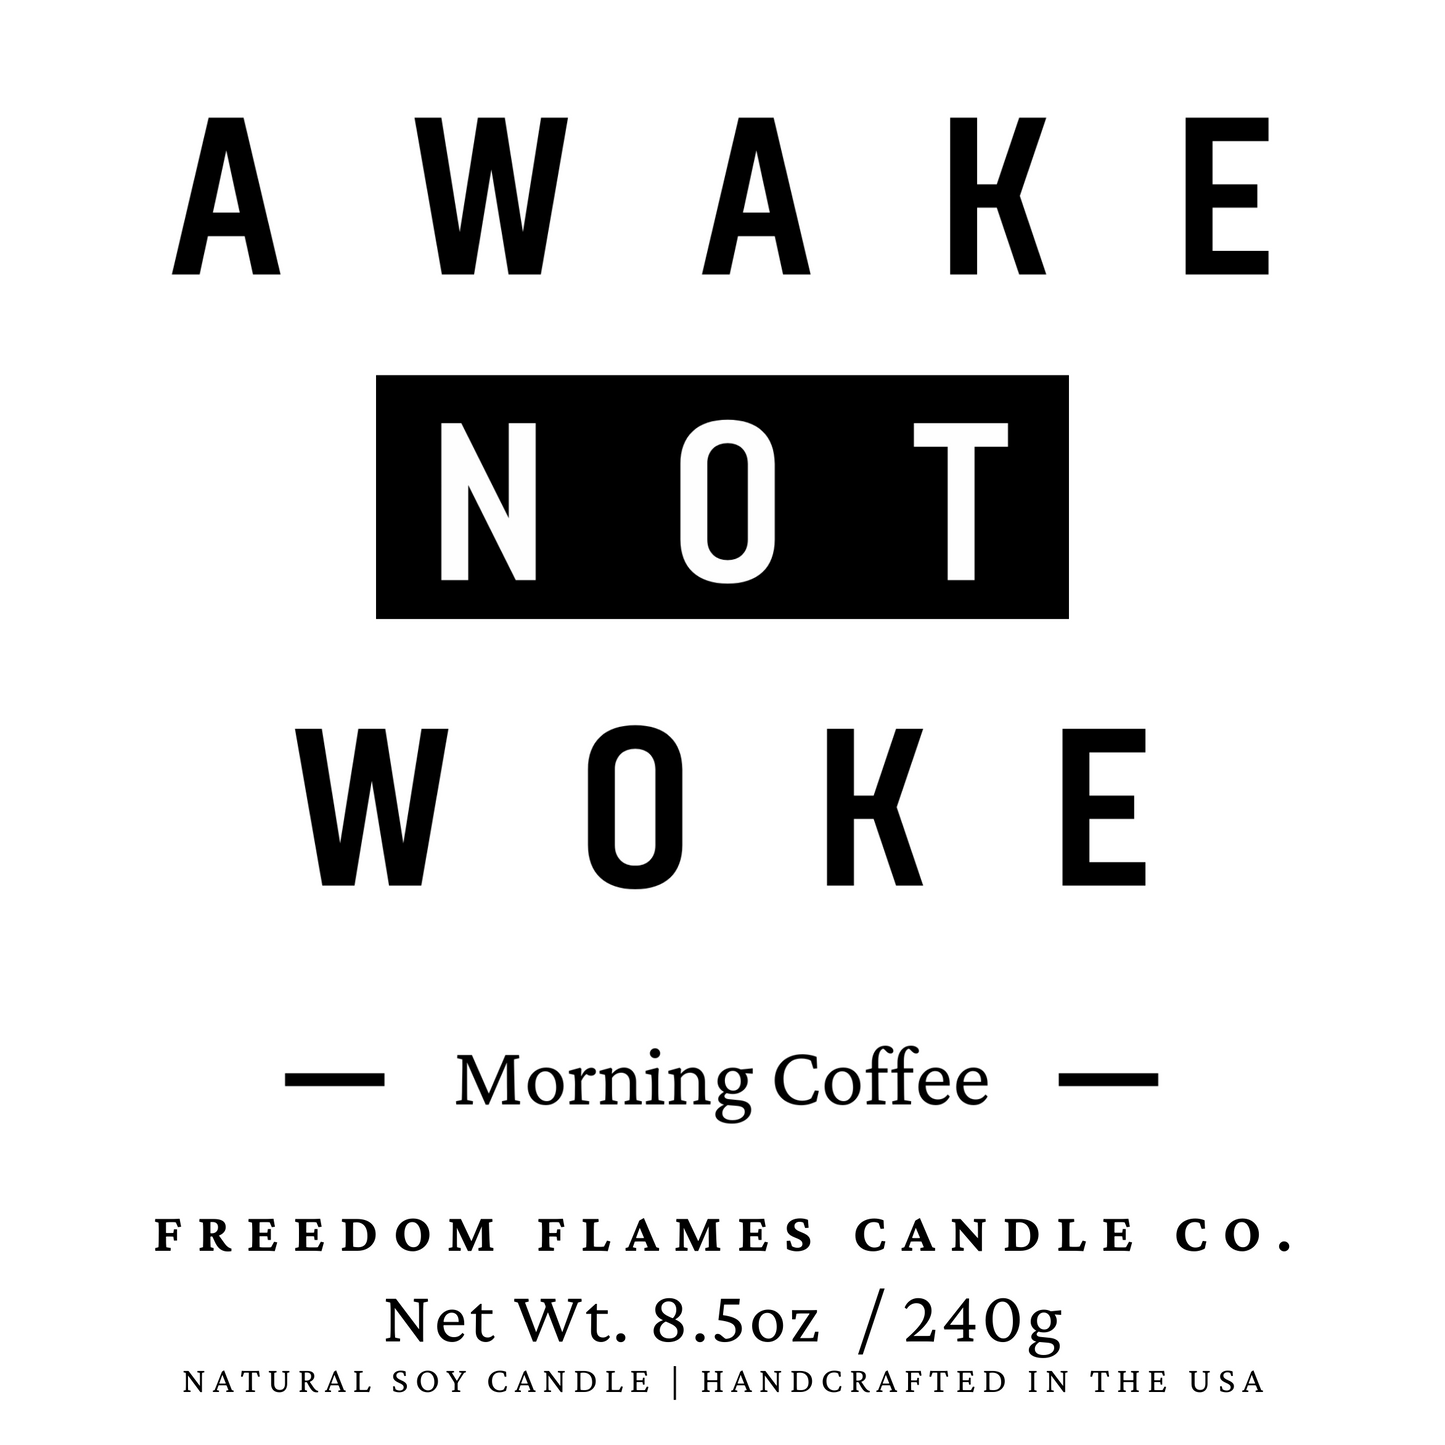 Awake NOT Woke